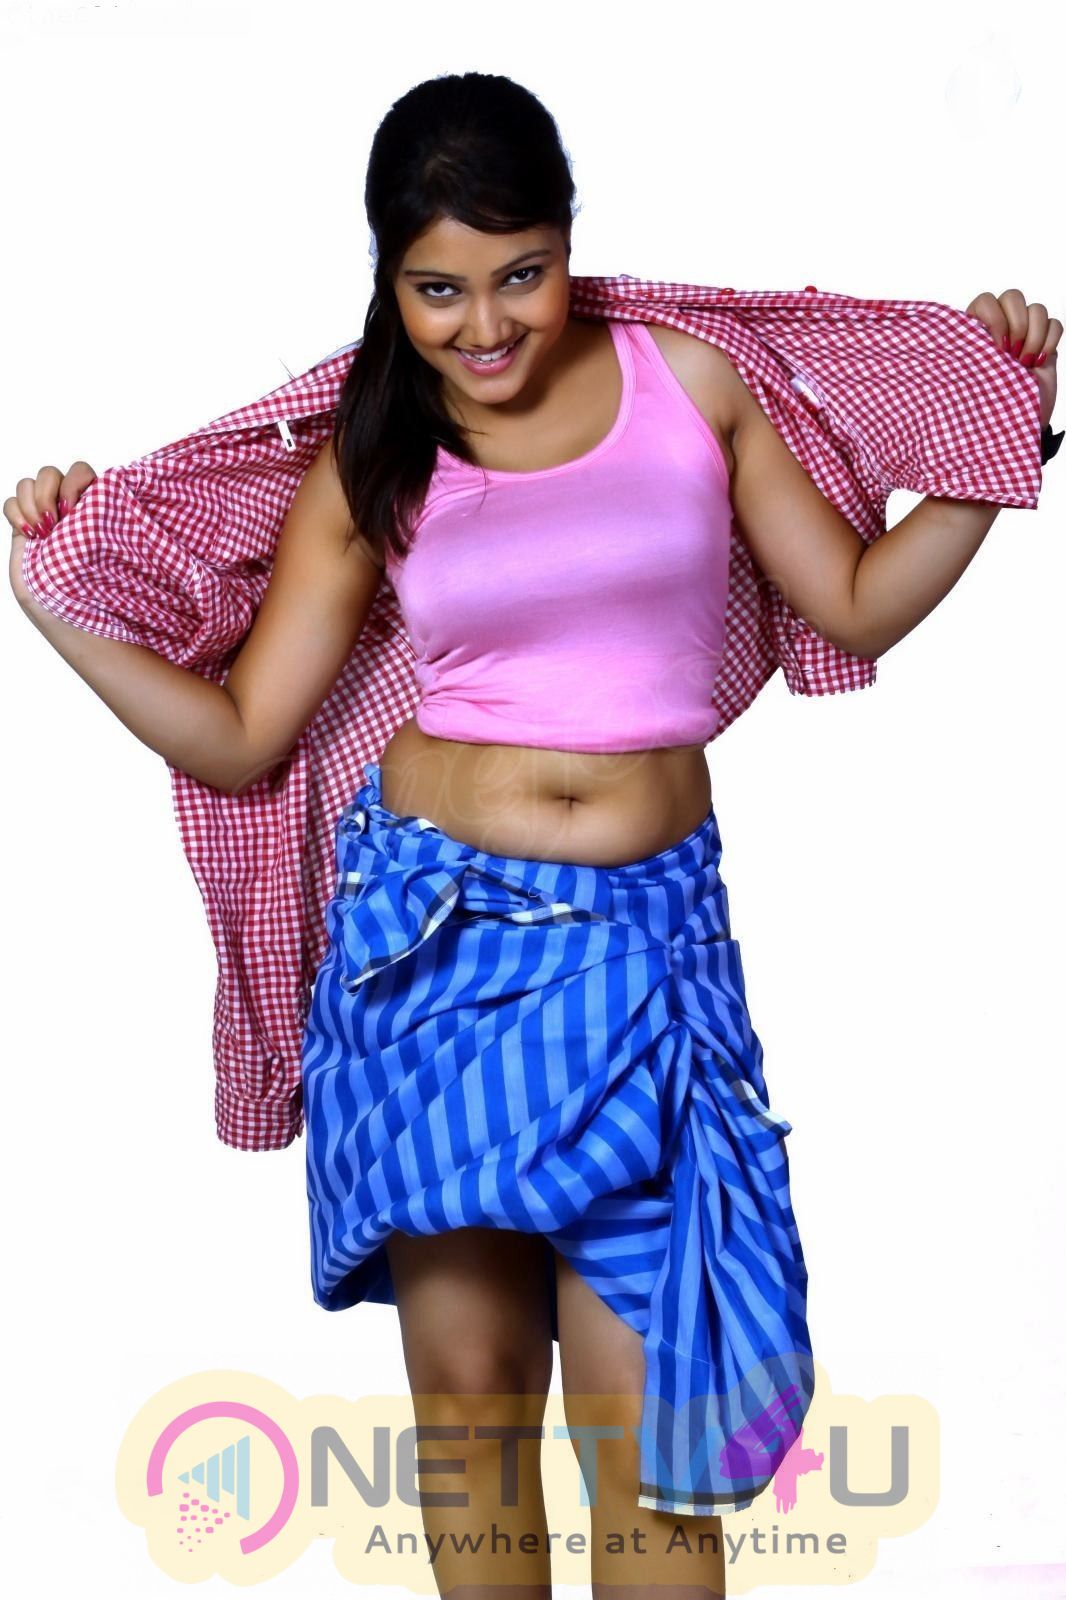 Priyanka Nalkar Hot And Exclusive Images Telugu Gallery